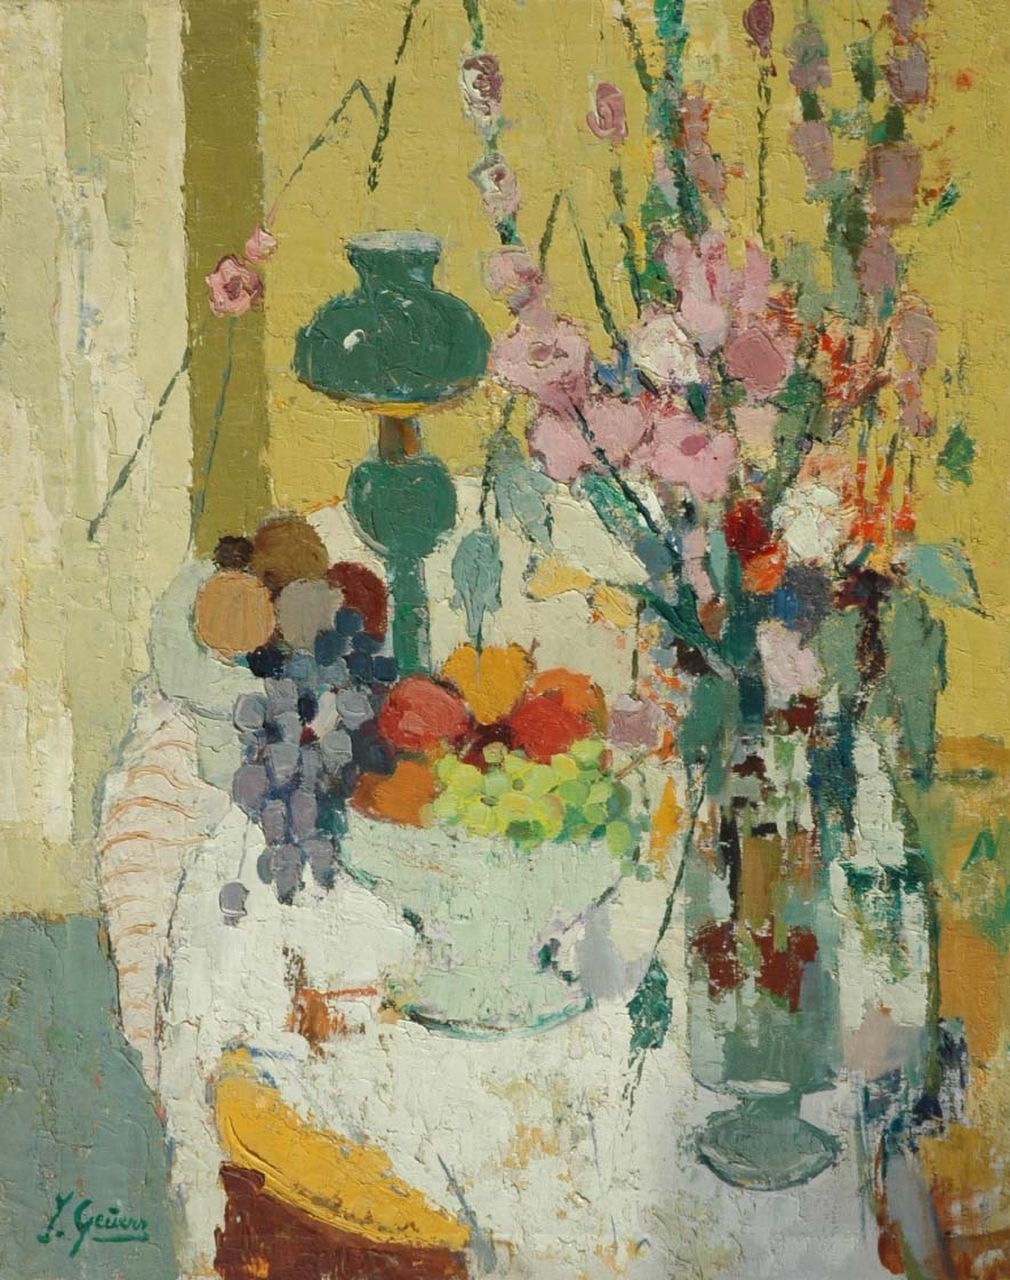 Geuens J.  | Jacques Geuens, A still life with fruits and flowers, Öl auf Leinwand 99,3 x 79,8 cm, signed l.l.